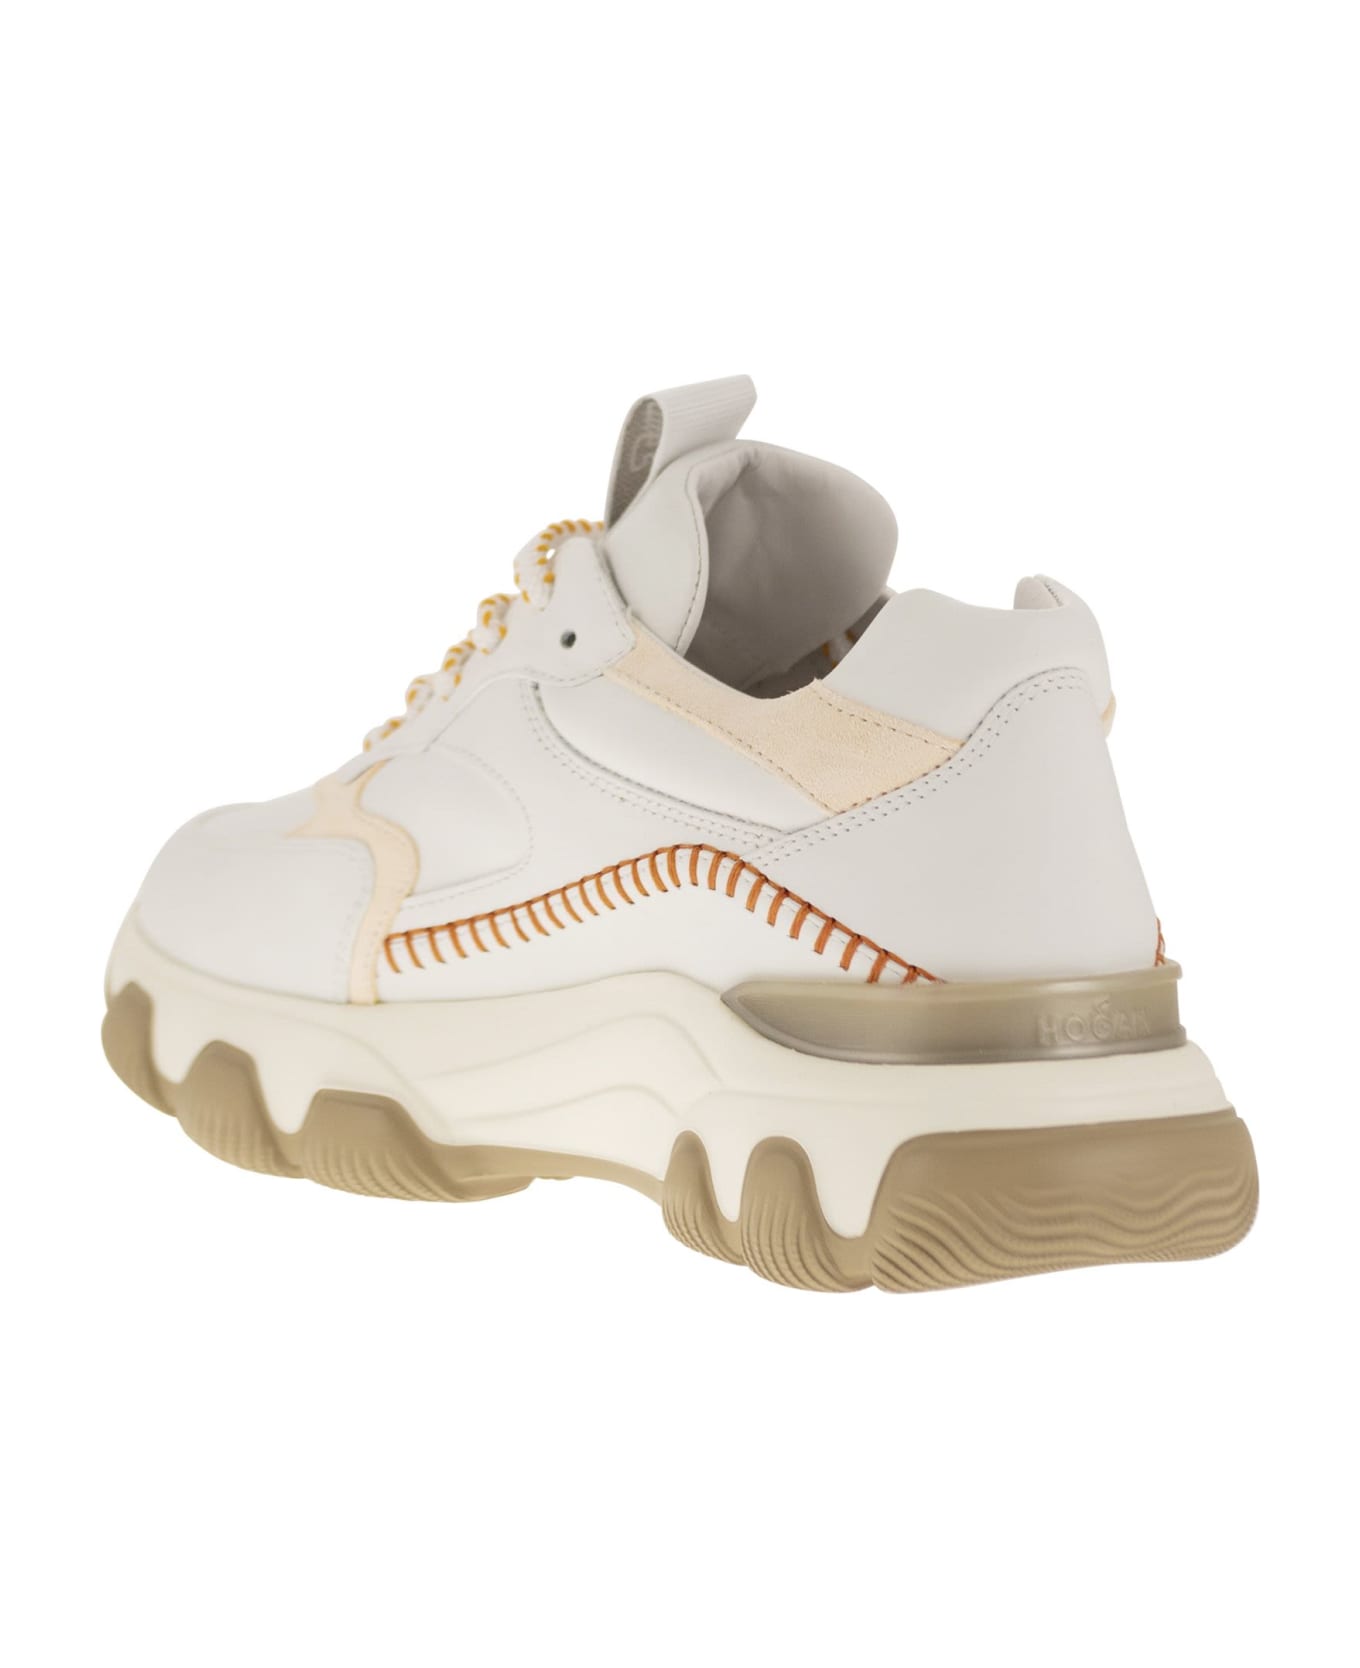 Hogan Sneakers Hyperactive - White/orange